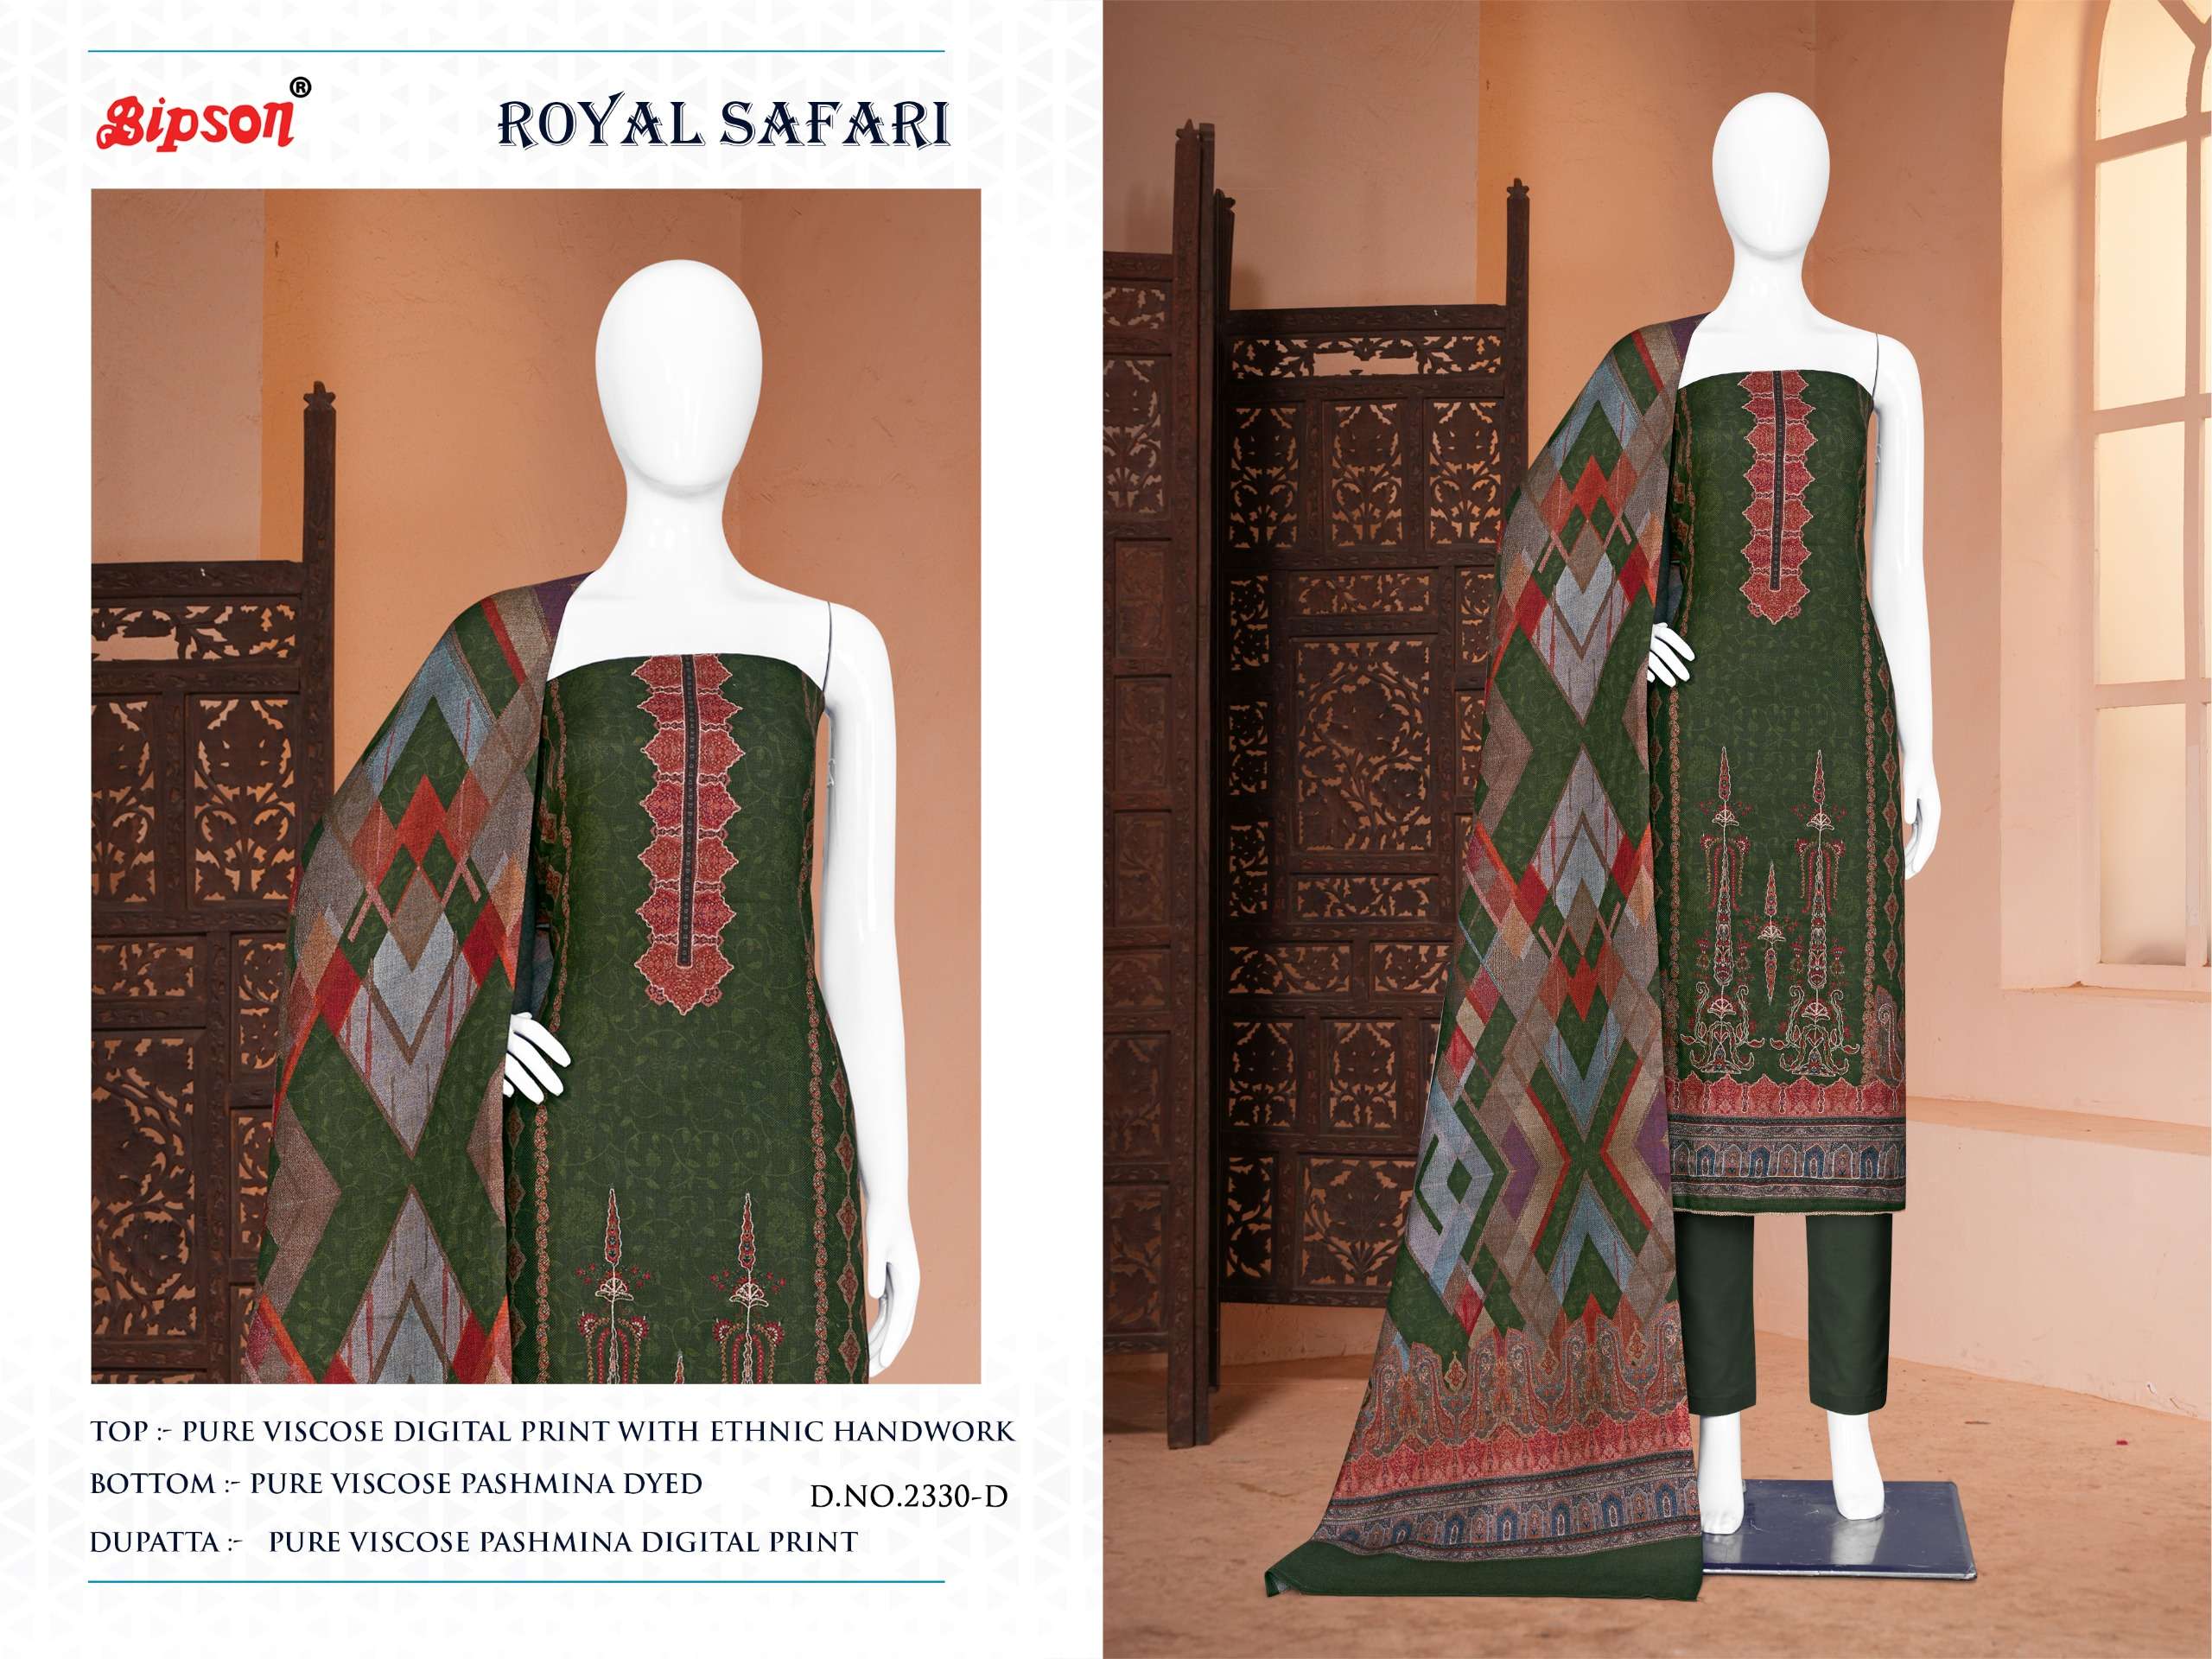 bipson royal safari 2329 colours designer fancy party wear salwar kameez wholesaler surat gujarat